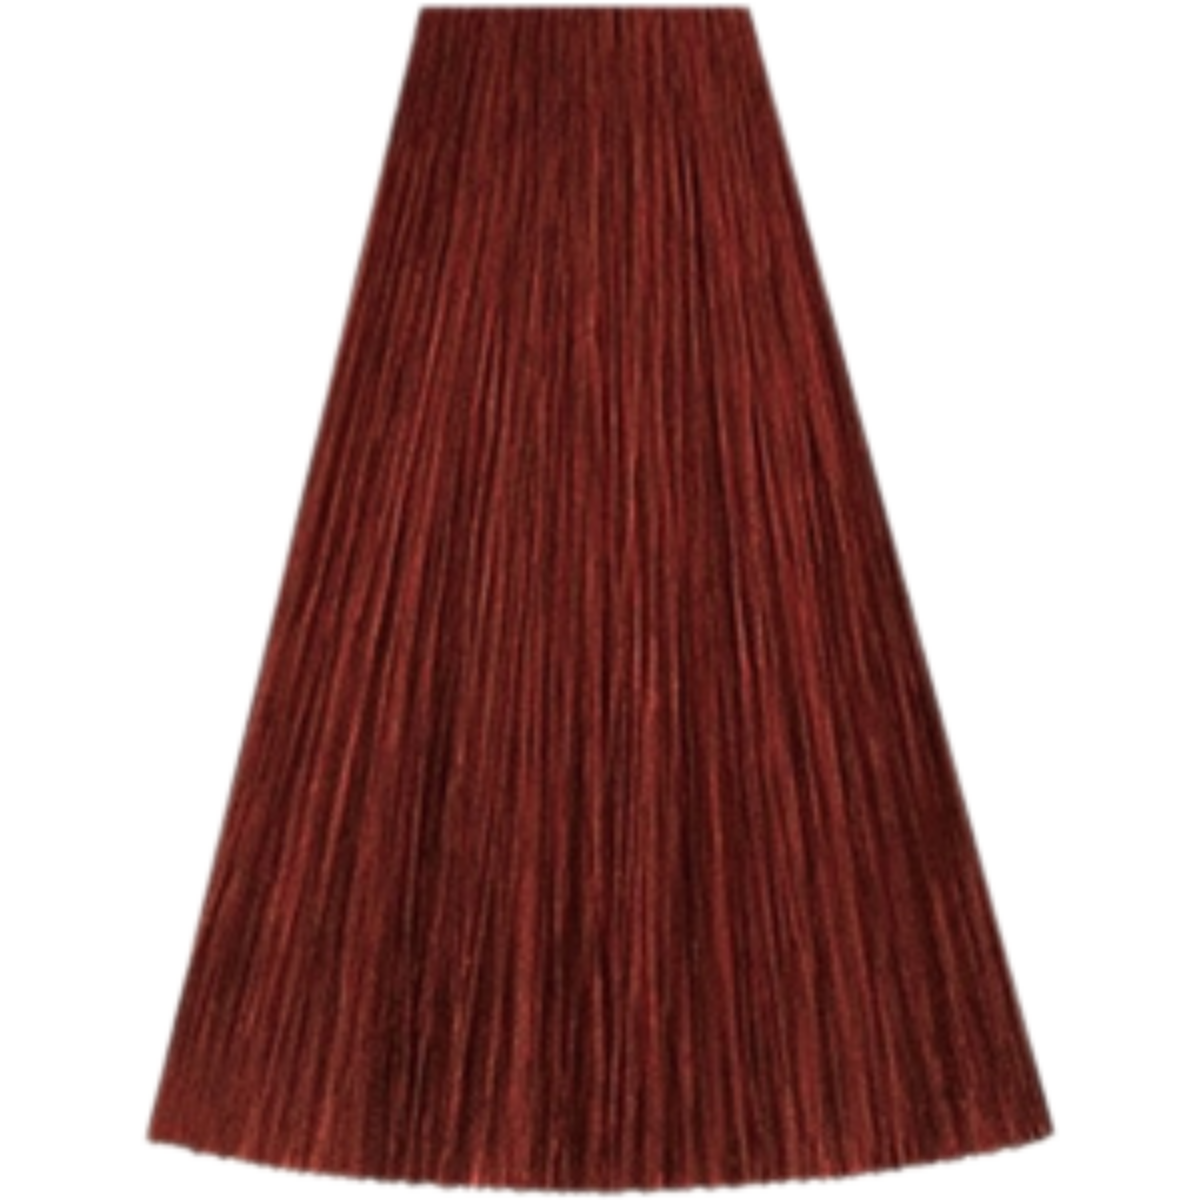 צבע שיער גוון 0/45 RED MAHOGANY MIX קאדוס KADUS צבע לשיער 60 גרם